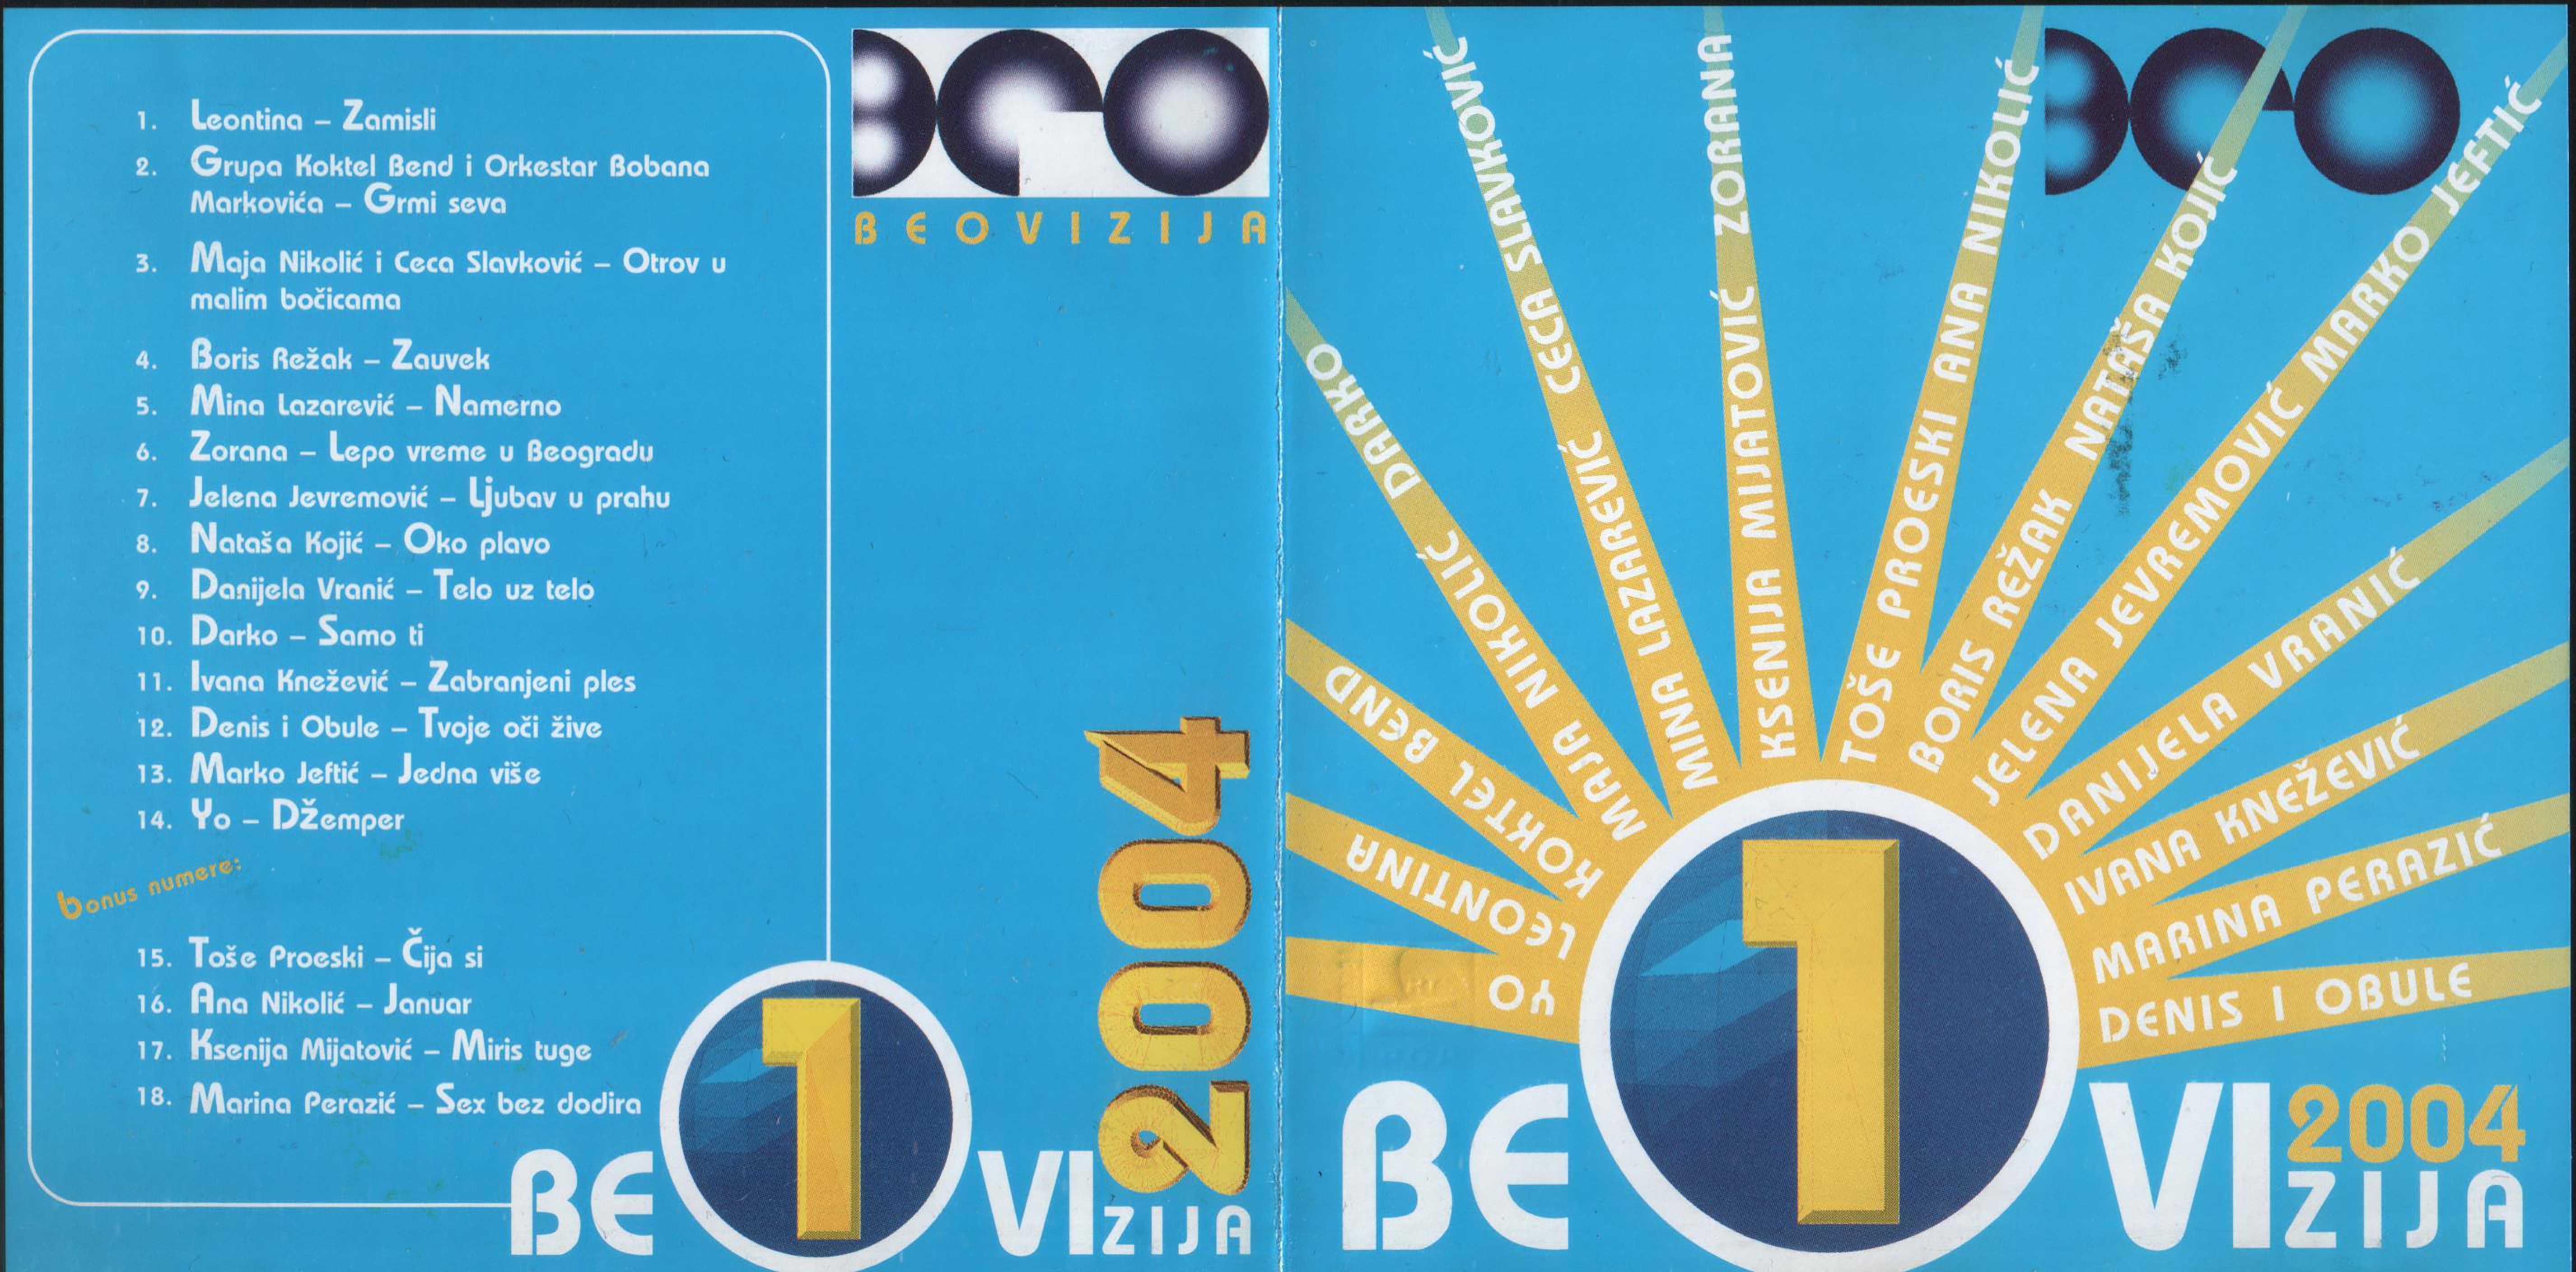 Beovizija 2004 CD 1 1